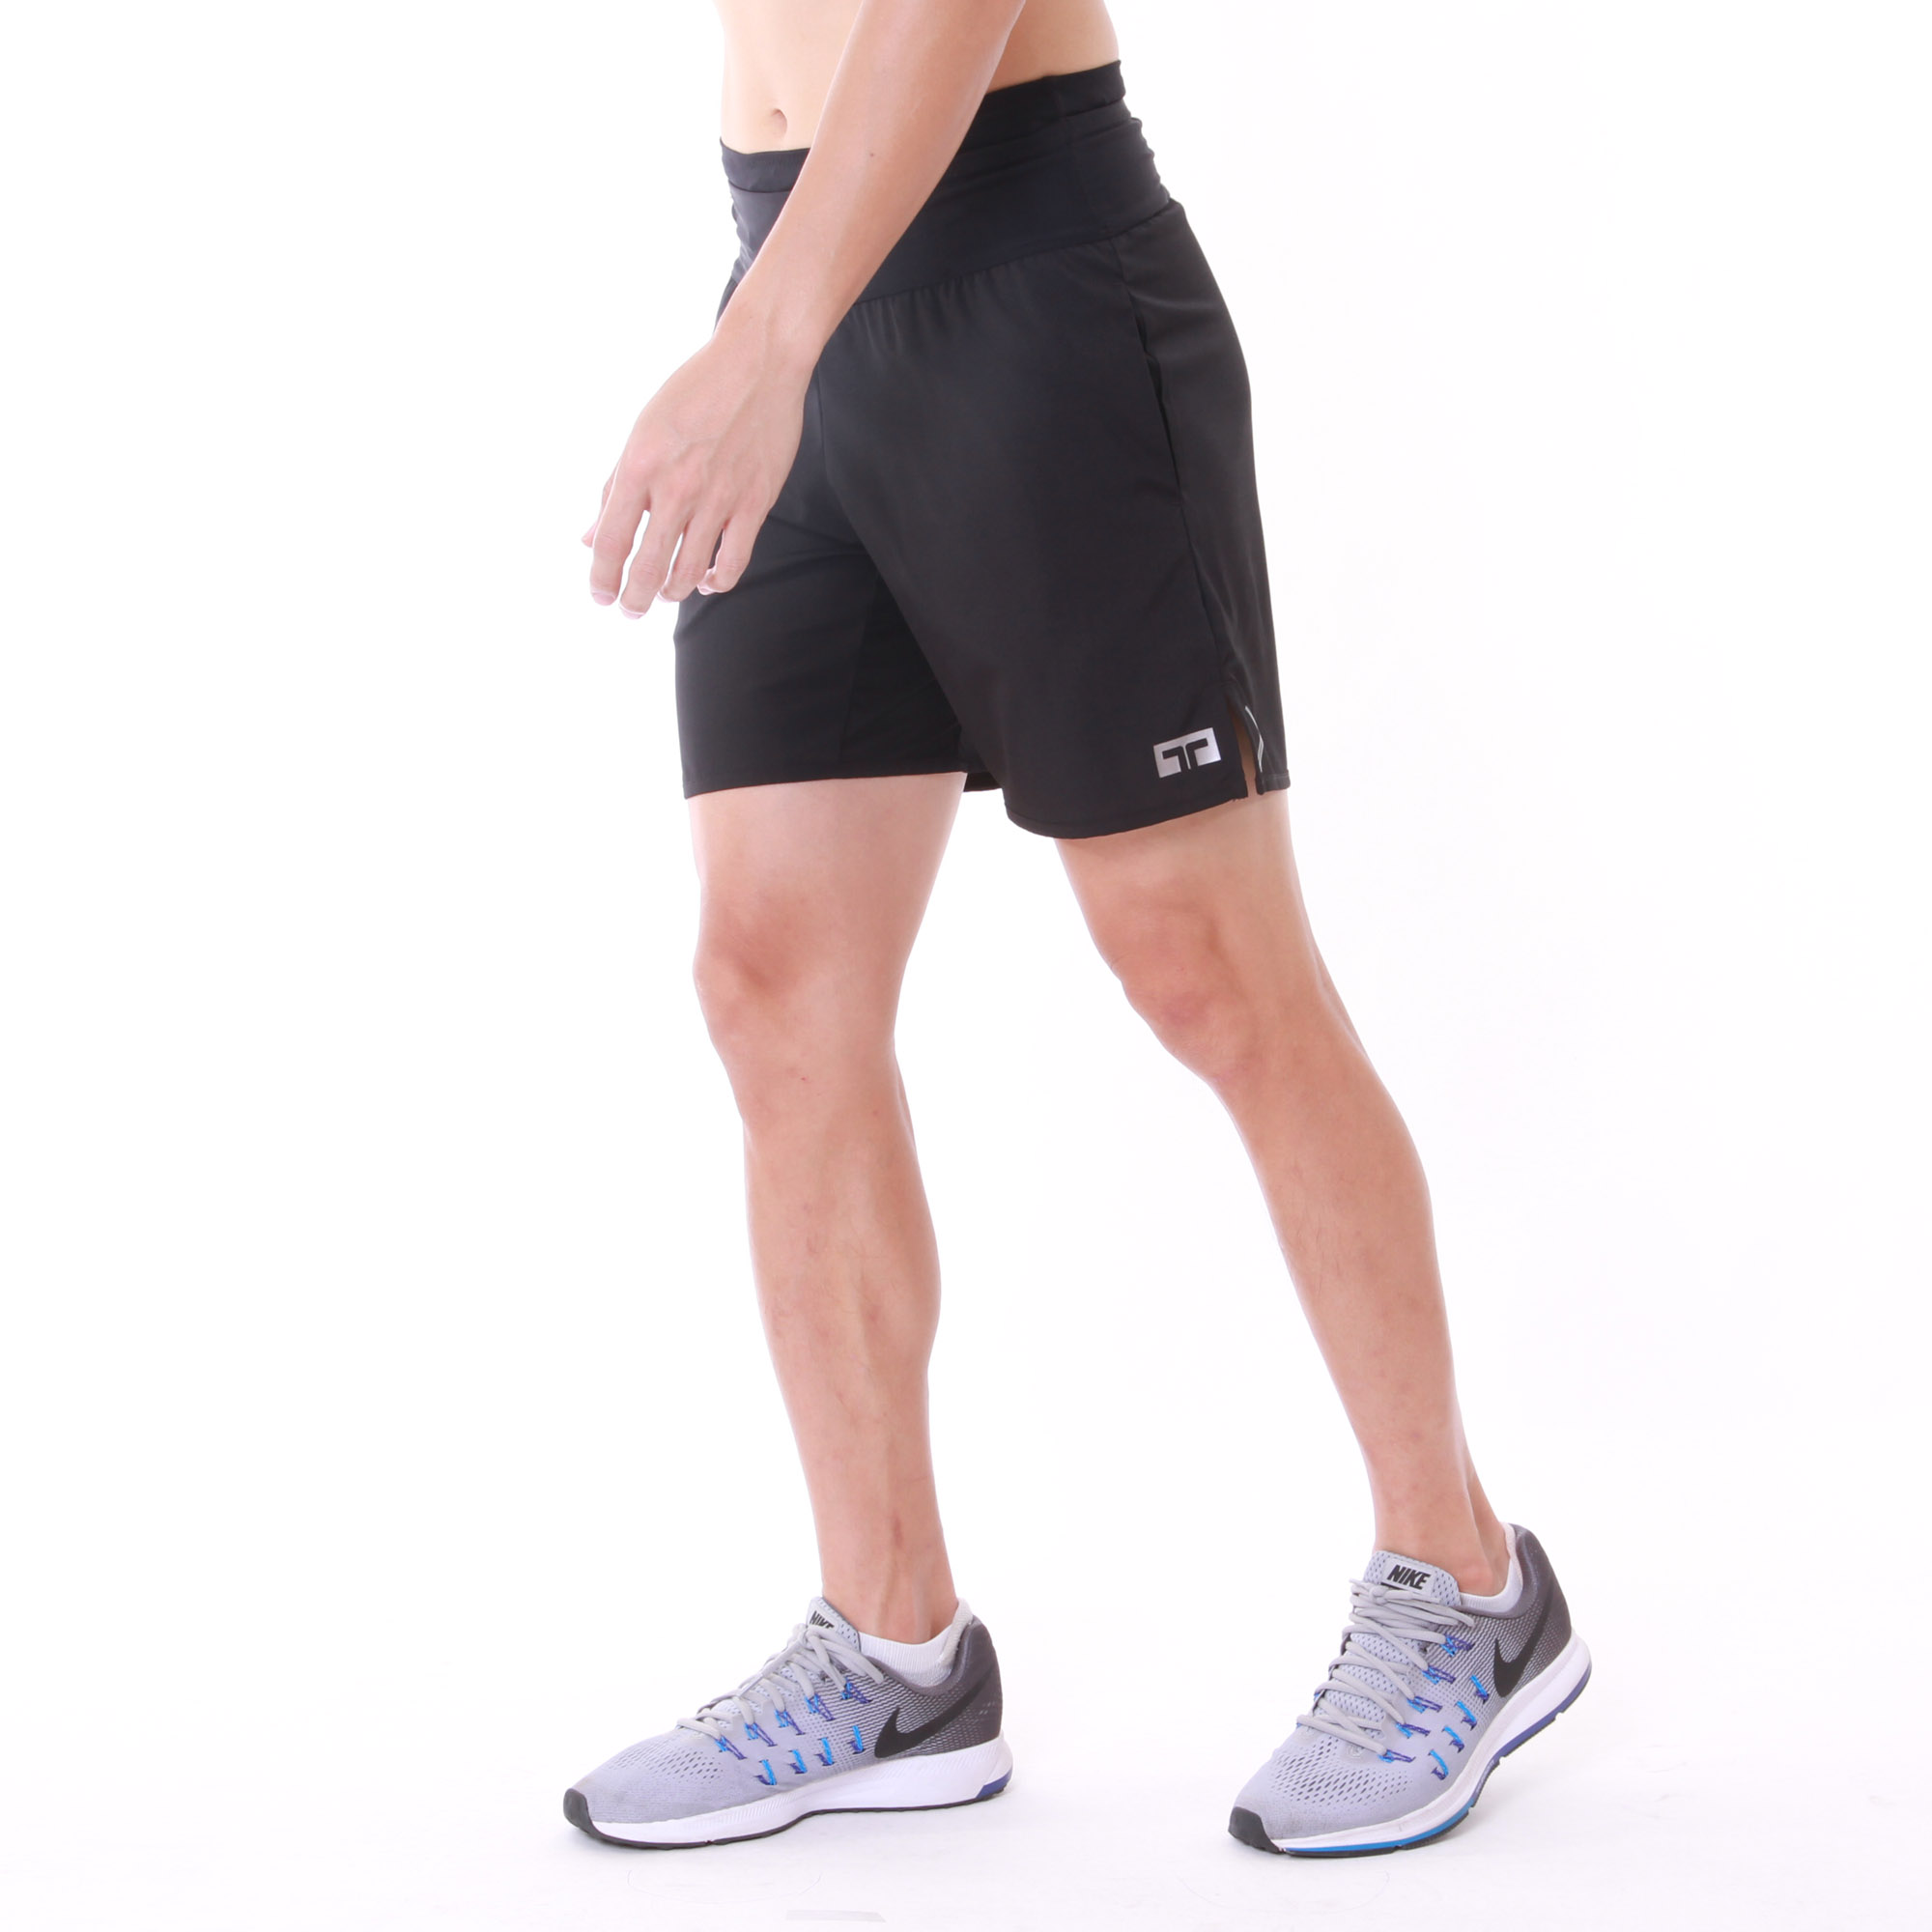 TL 6” Ultra Shorts   กางเกงขาสั้น รุ่น อัลตร้า